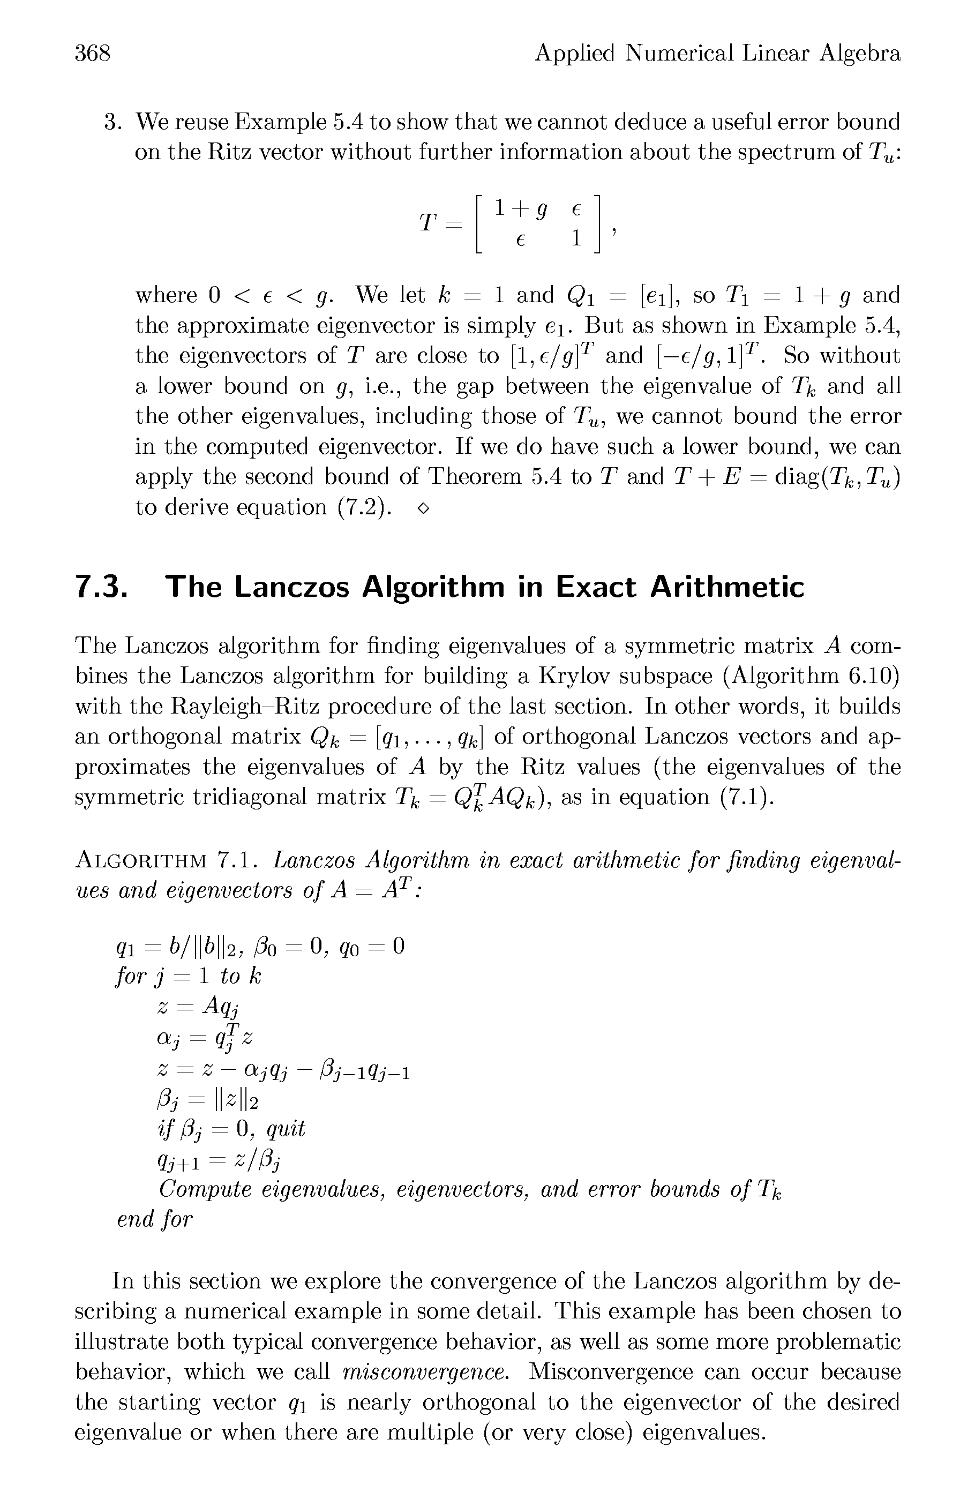 7.3 The Lanczos Algorithm in Exact Arithmetic